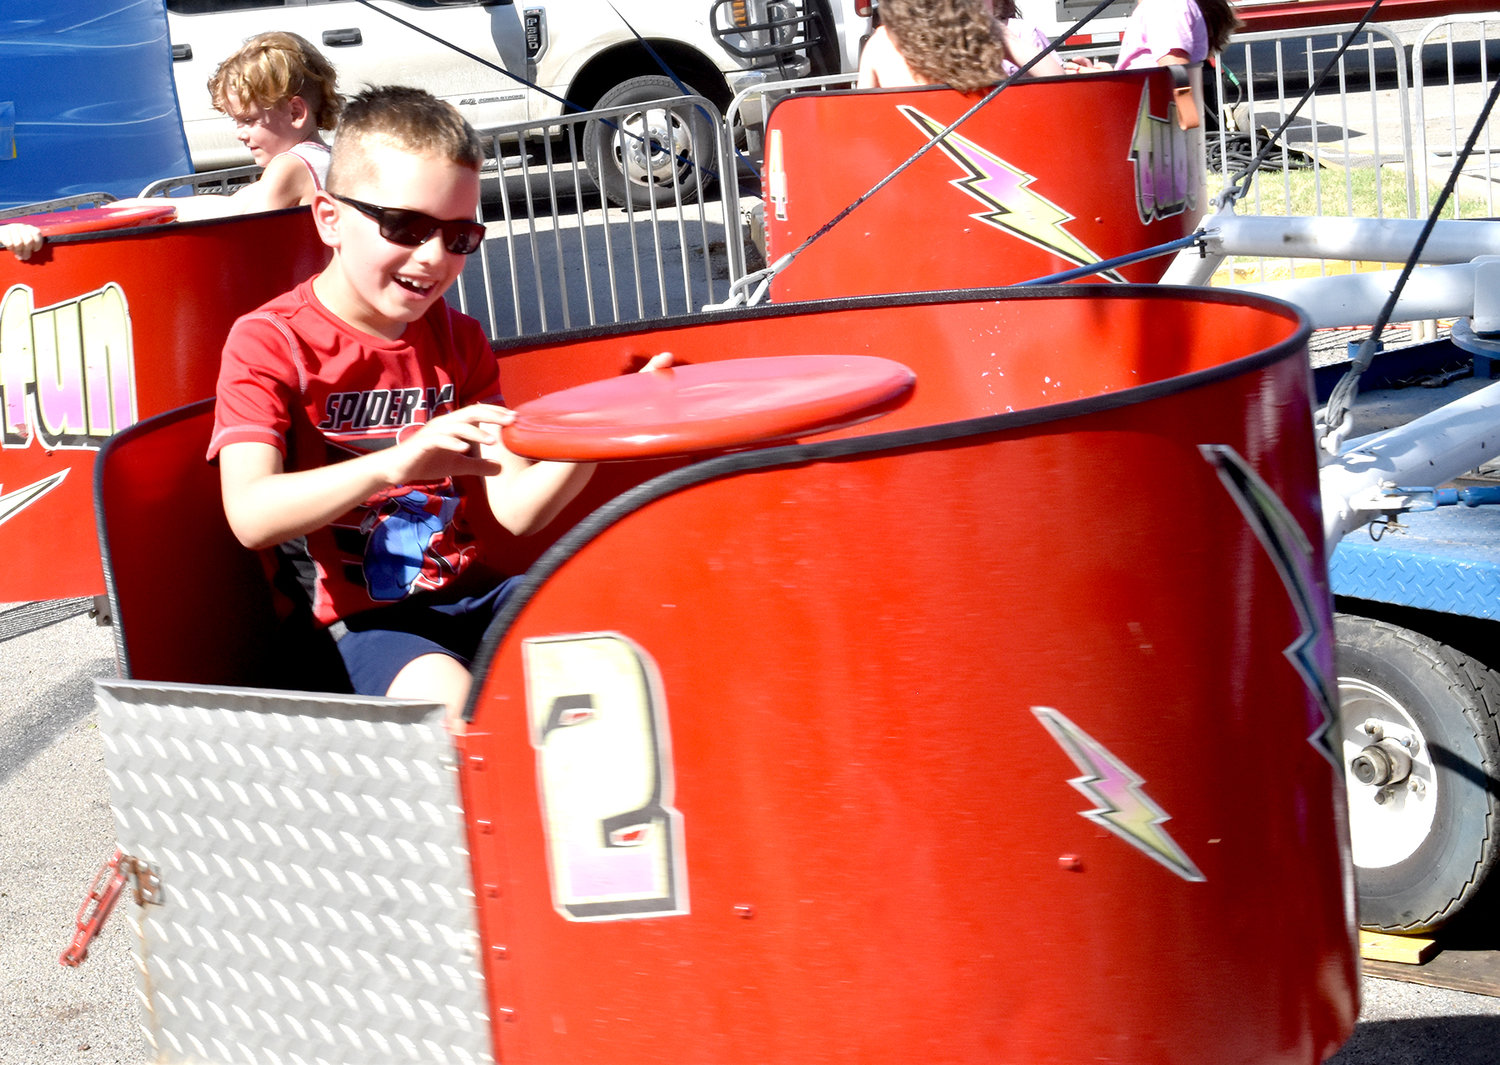 Gavin McKinley smiled through the "Tubs of Fun" carnival ride.